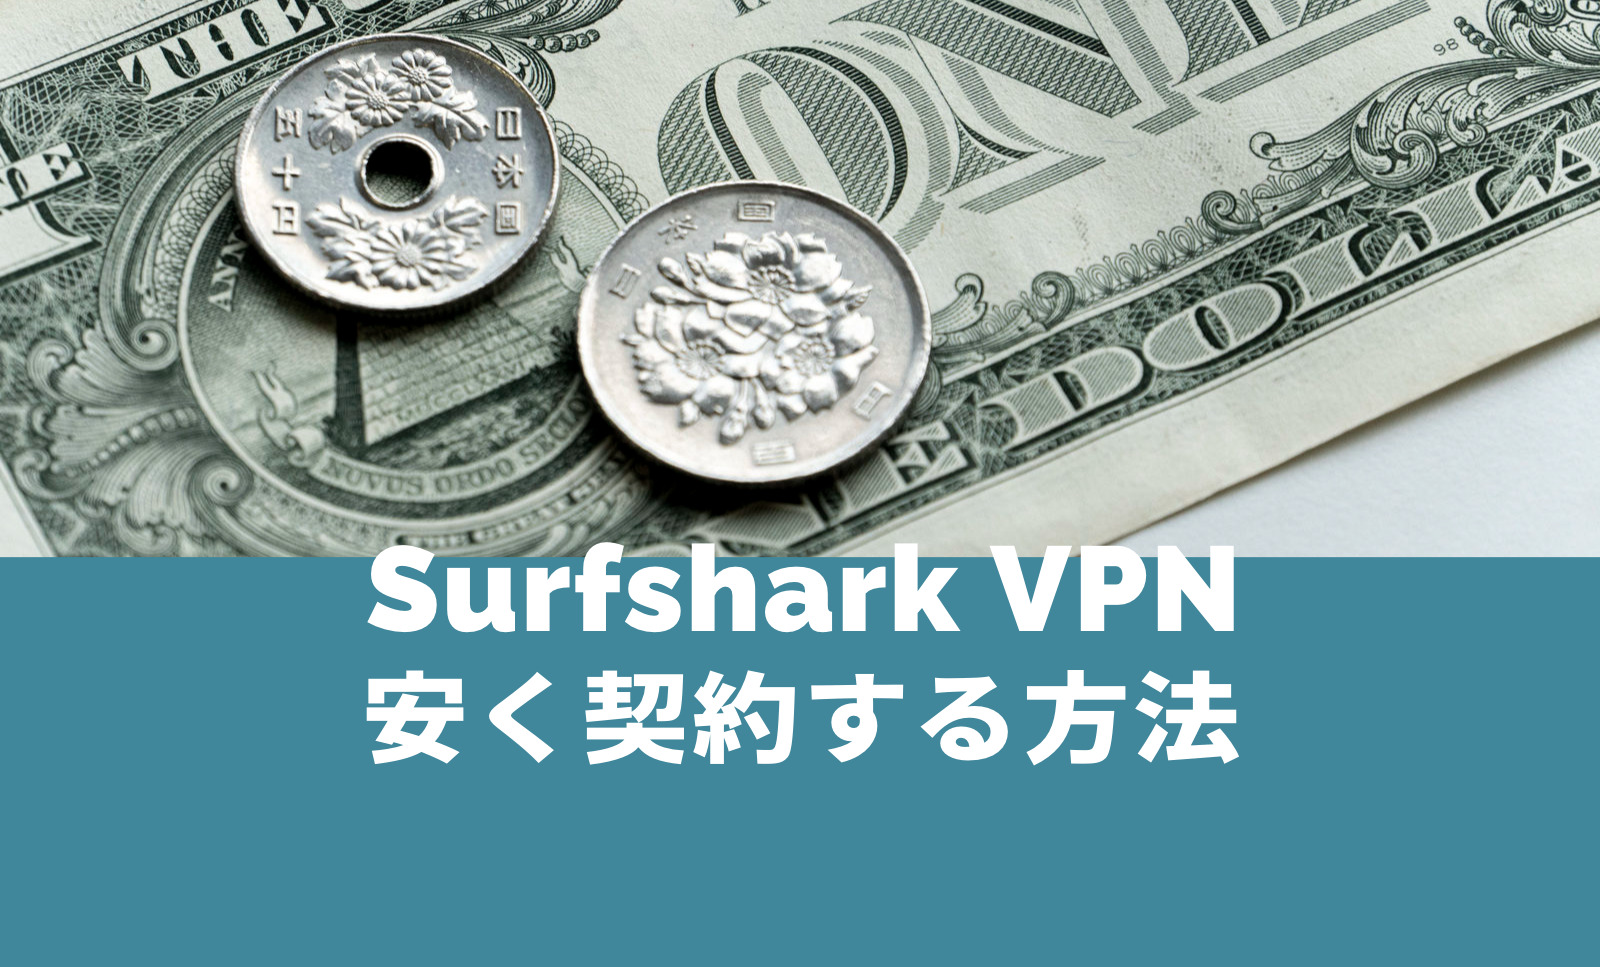 Surfshark VPNを安く契約する方法は？お得な仕組みをまとめて解説！のサムネイル画像